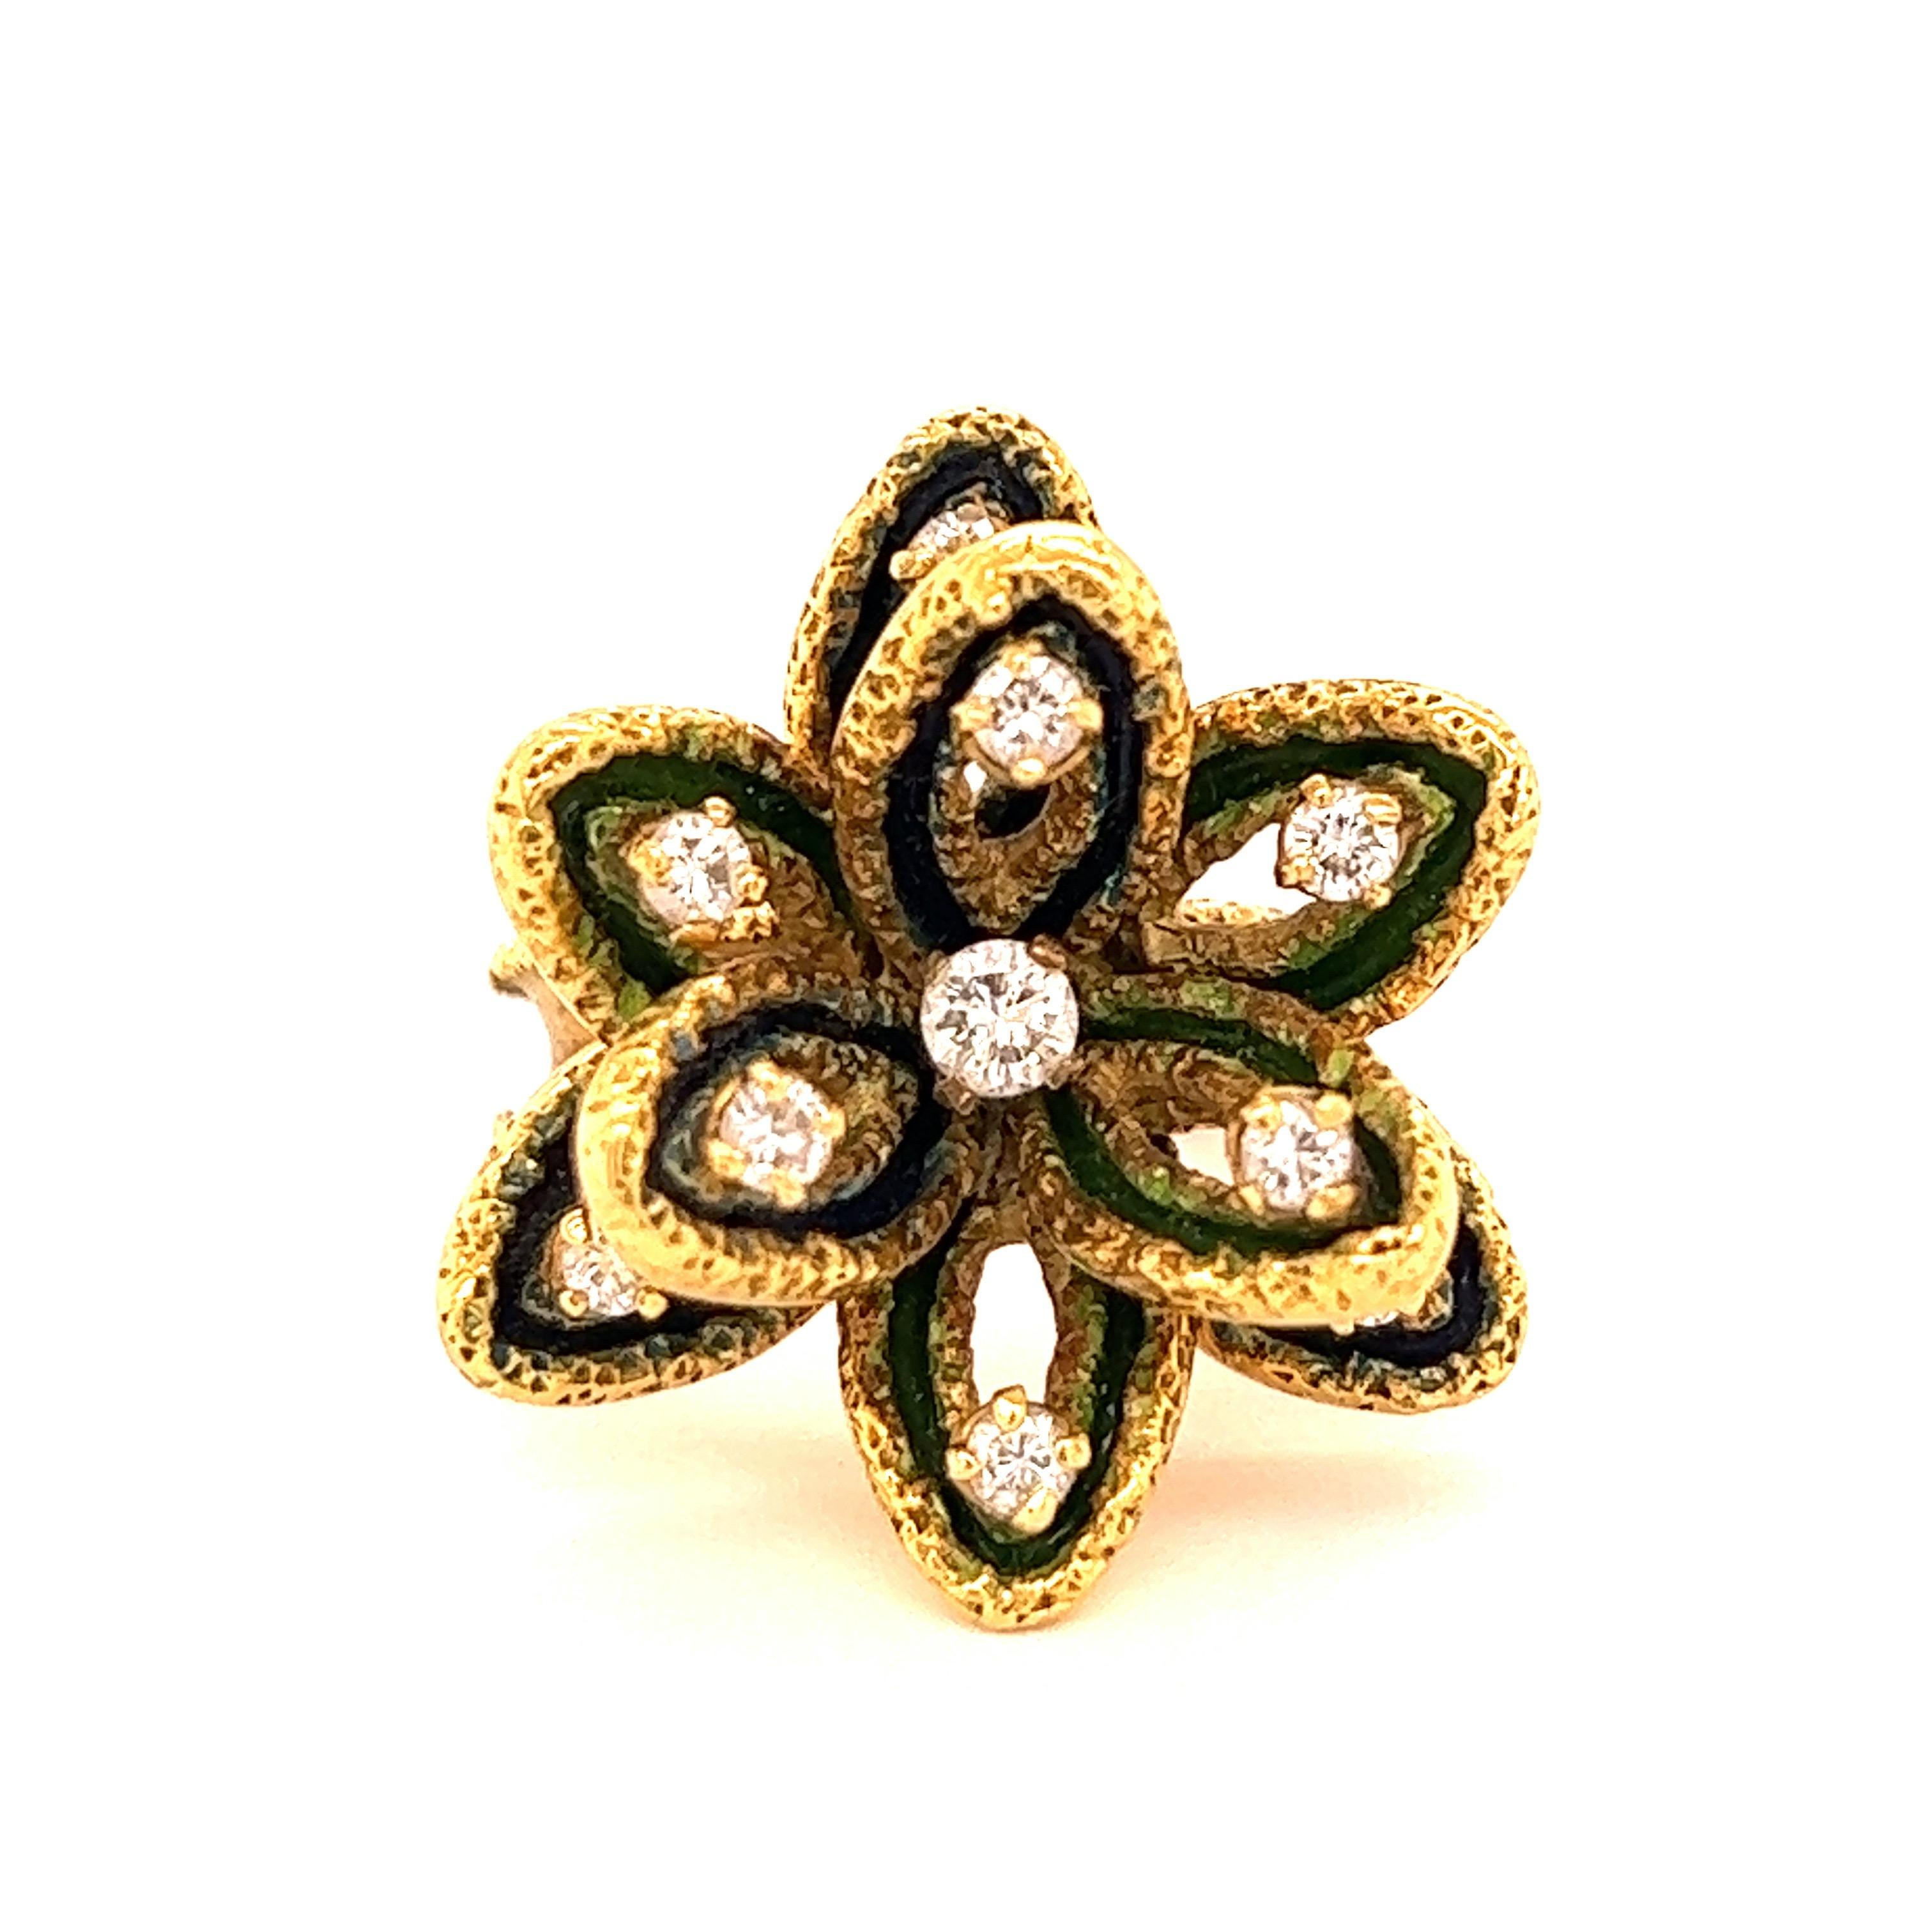 Boucheron Paris Flower Diamond Ring

Ten round-cut diamonds of approximately 0.50 carat, set on textured on 18 karat yellow gold, with a flower motif; marked Boucheron Paris, 50208

Size: Top width 2.5 cm
Total weight: 14.0 grams